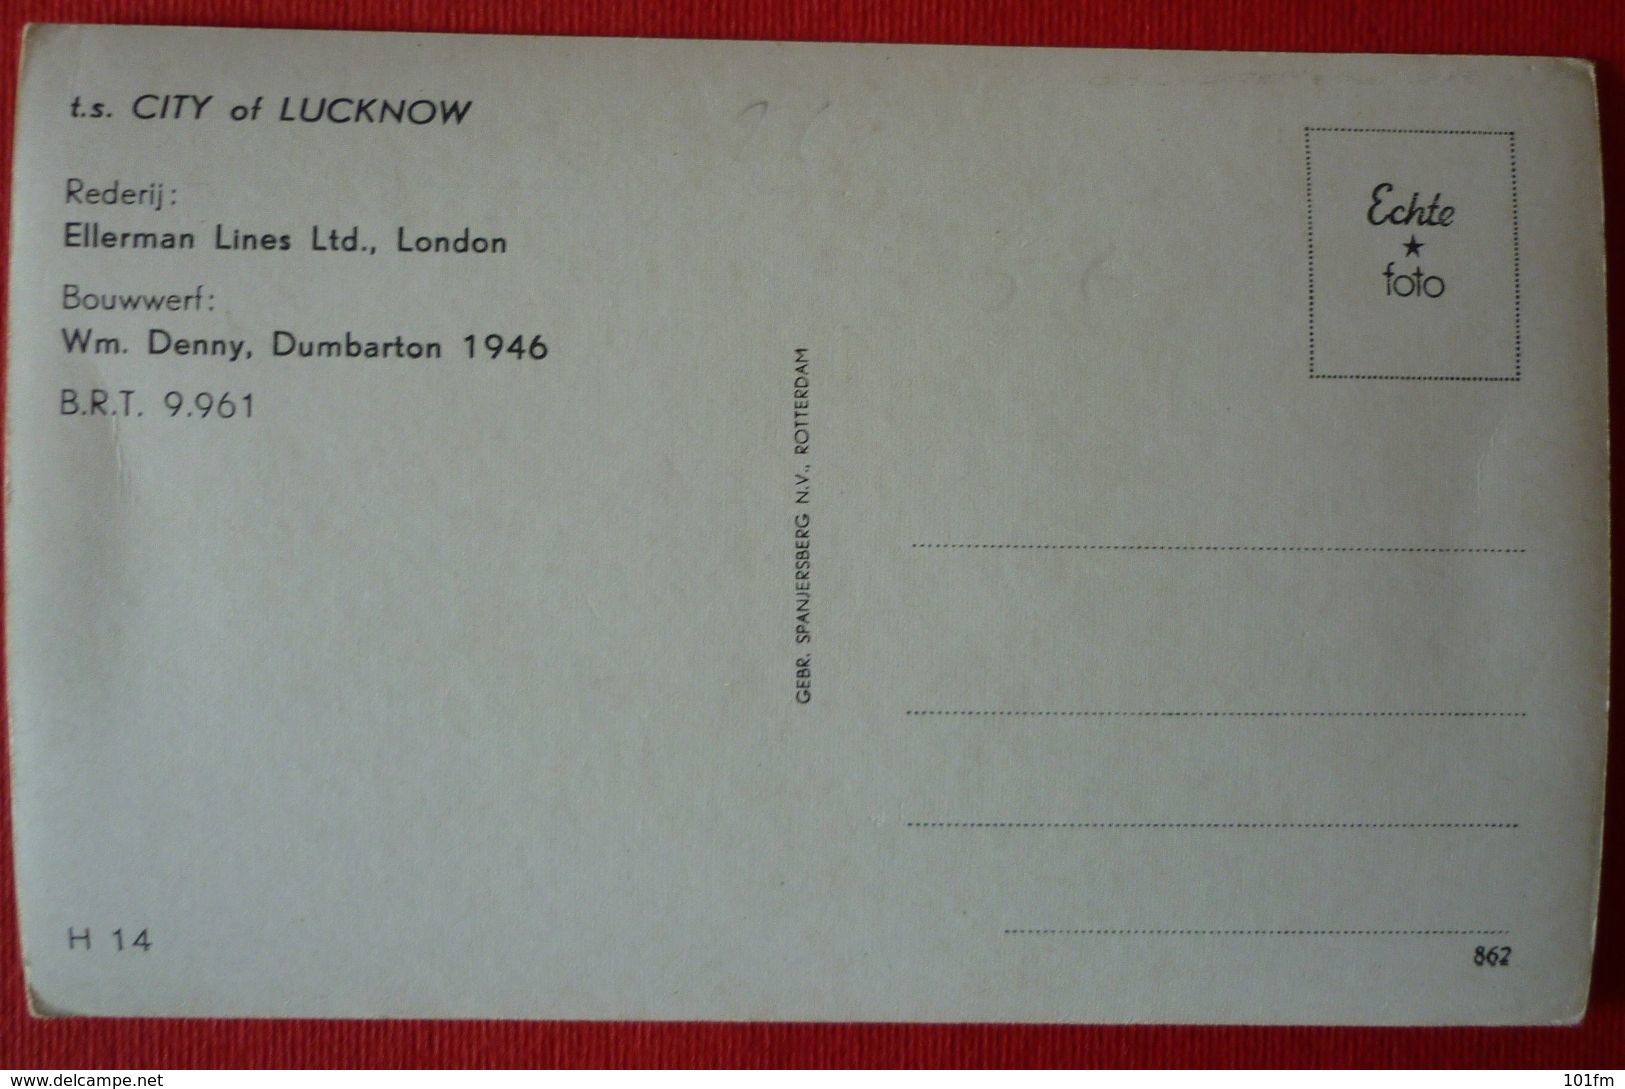 T.S. CITY OF LUCKNOW - ELLERMAN LINES LTD. LONDON - Dampfer